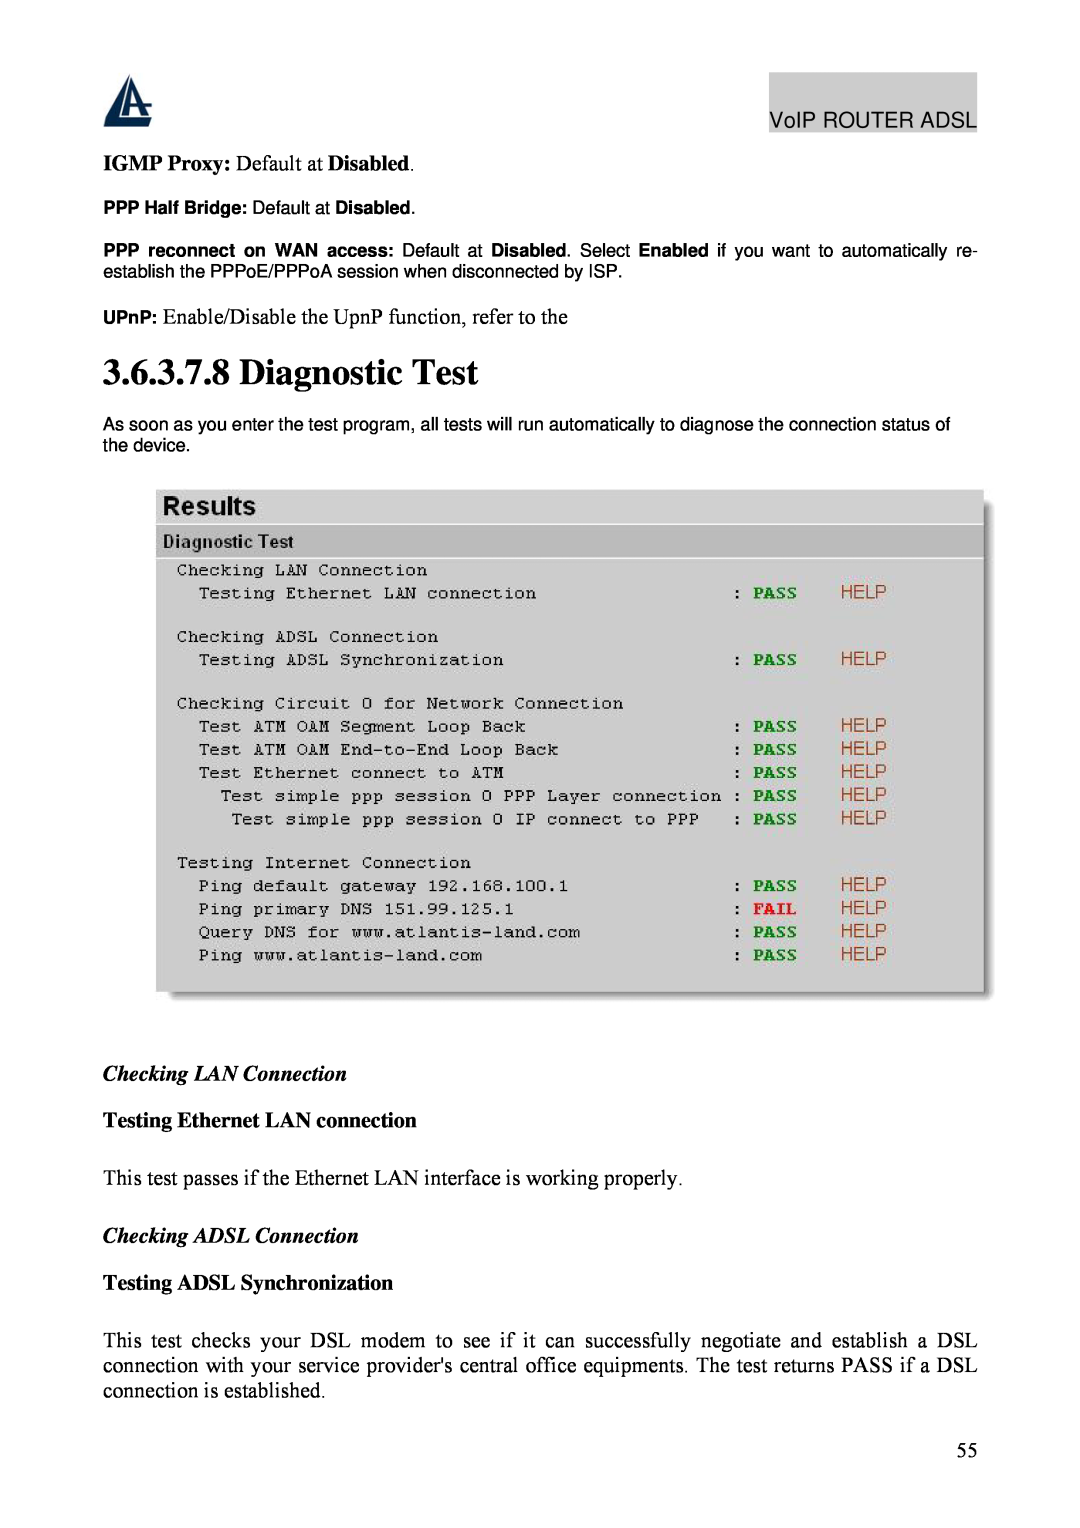 Atlantis Land A02-RAV211 manual Diagnostic Test, IGMP Proxy Default at Disabled, Checking LAN Connection 